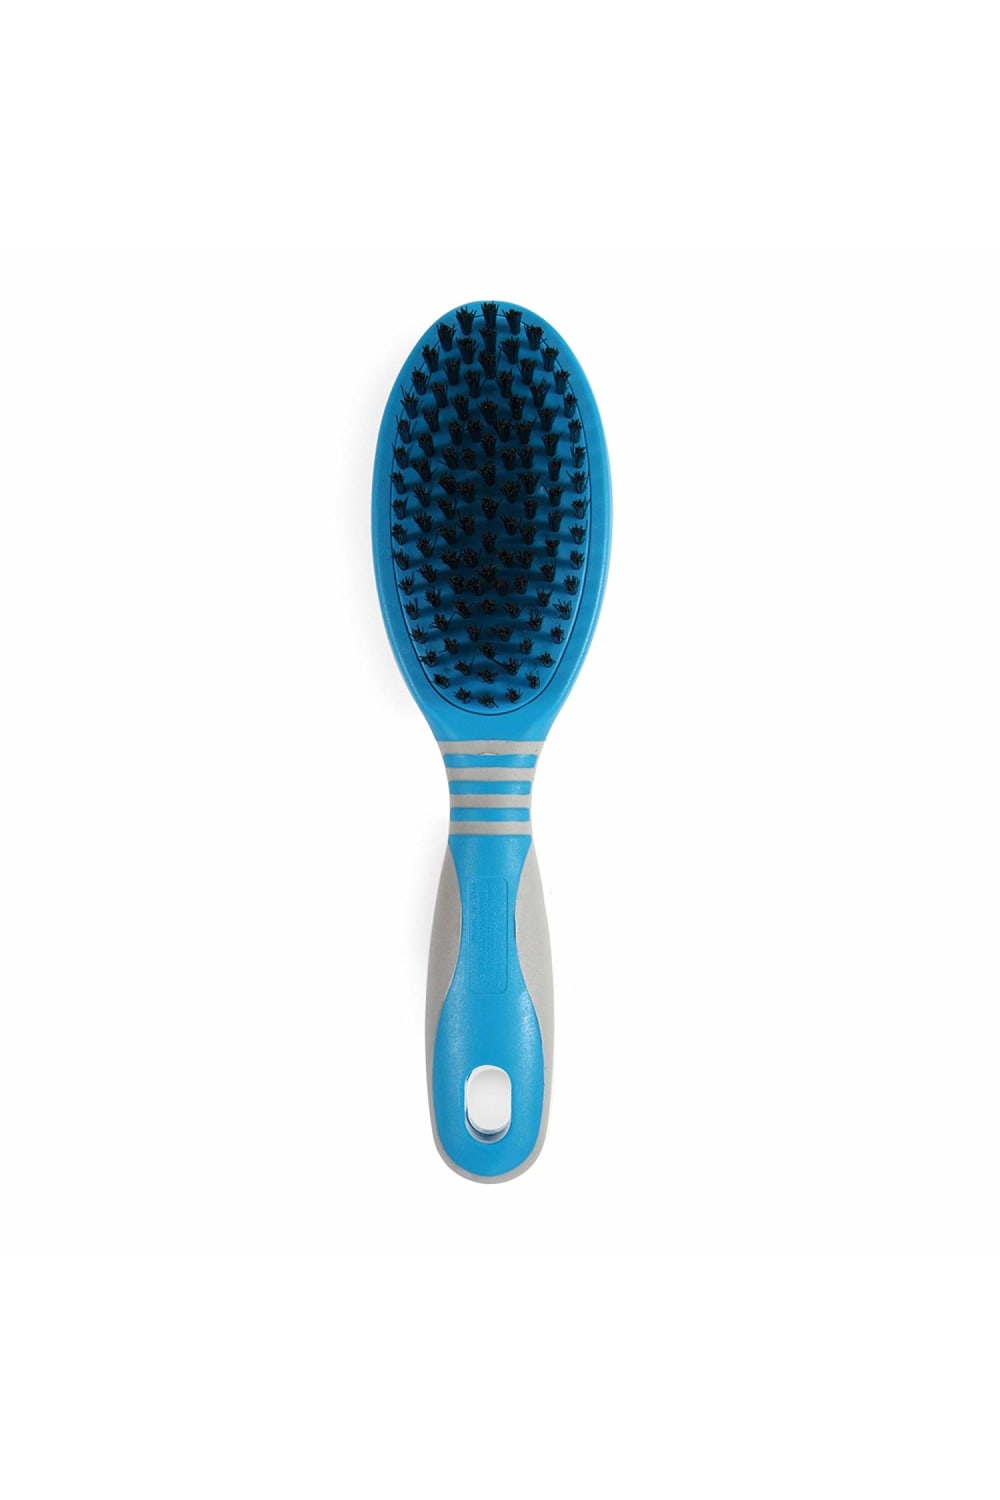 Ancol Ergo Bristle Brush (May Vary) (One Size)